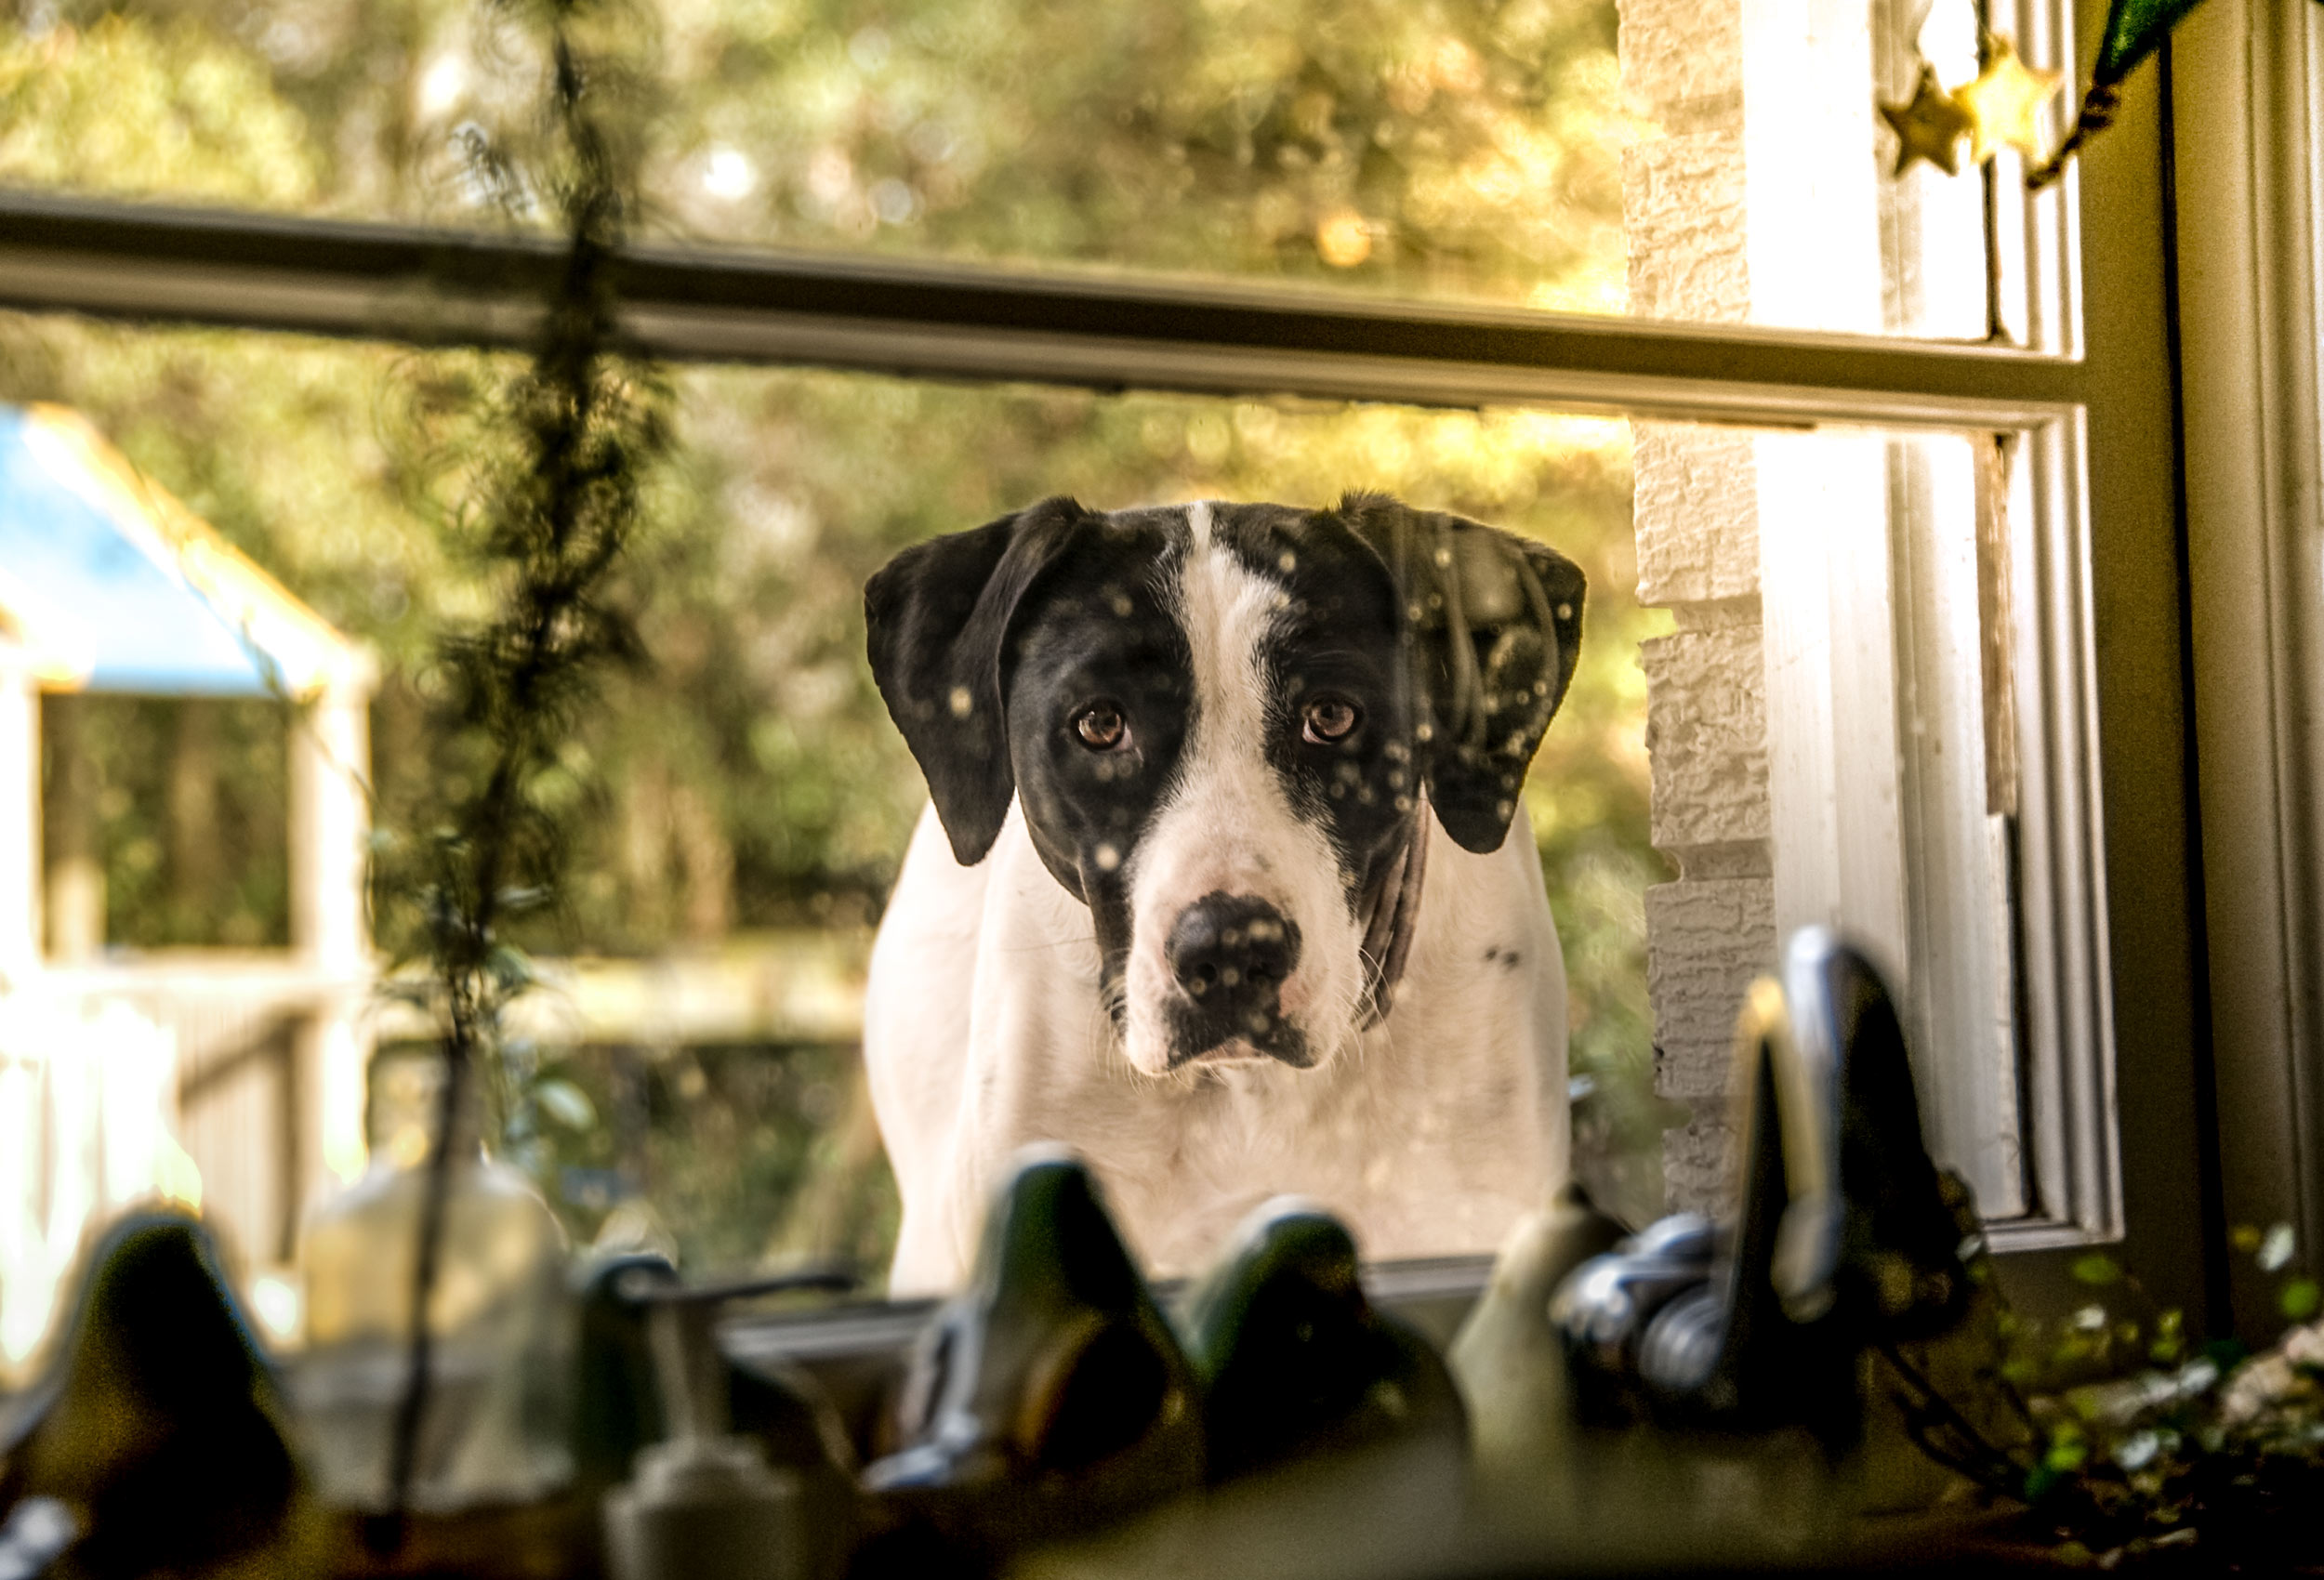 Black and white Hound dog looks through kitchen window - dog lifestyle photography